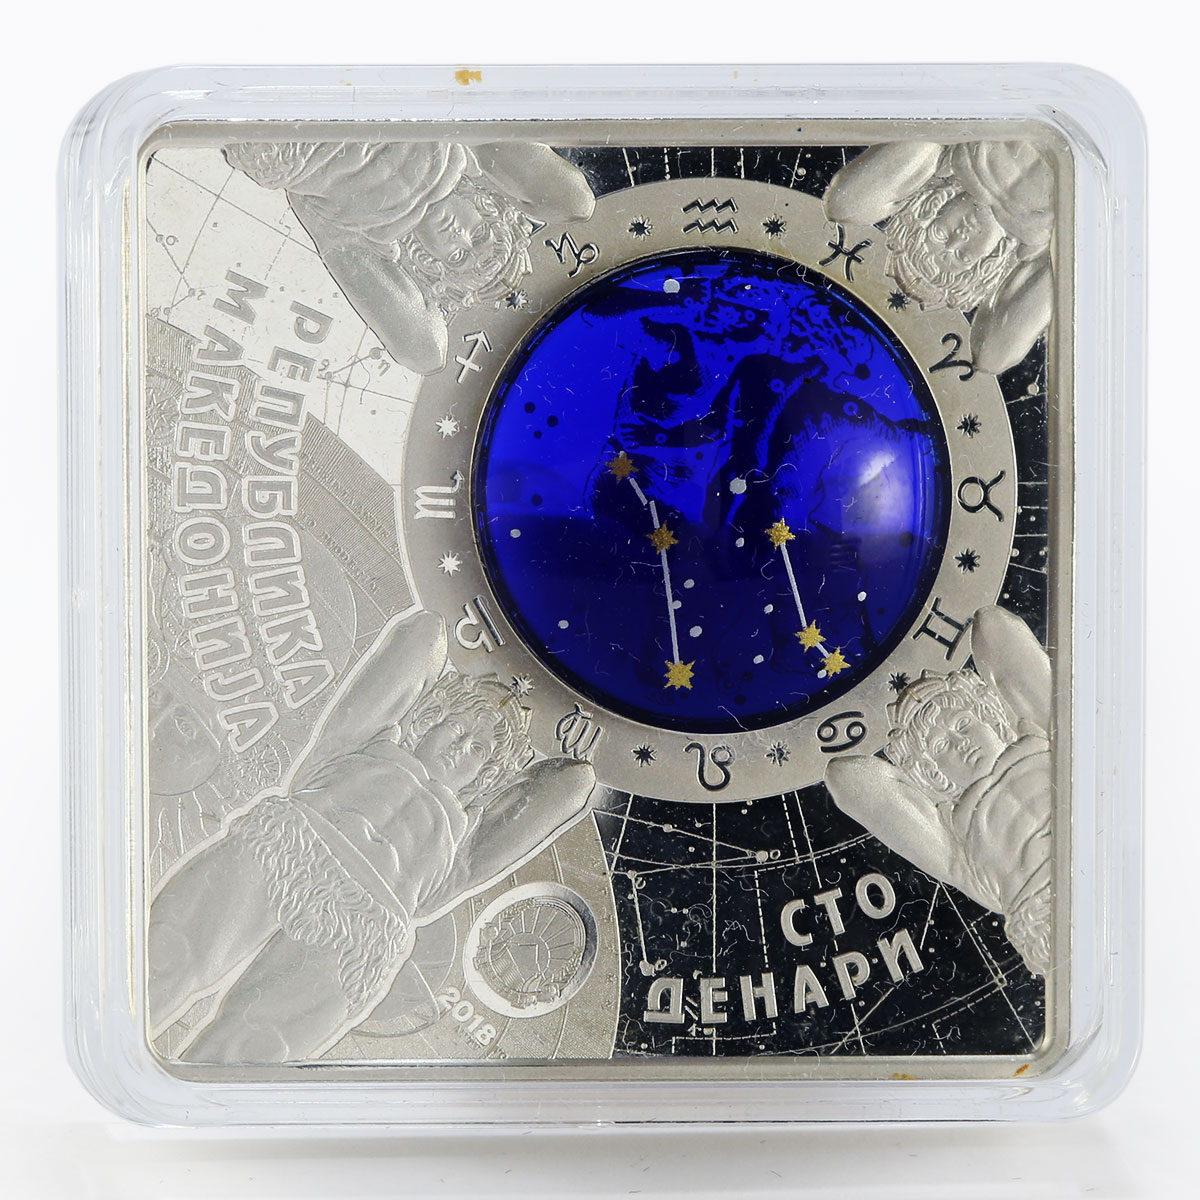 Macedonia 100 denari Zodiac Gemini 3D printing silver coin 2018